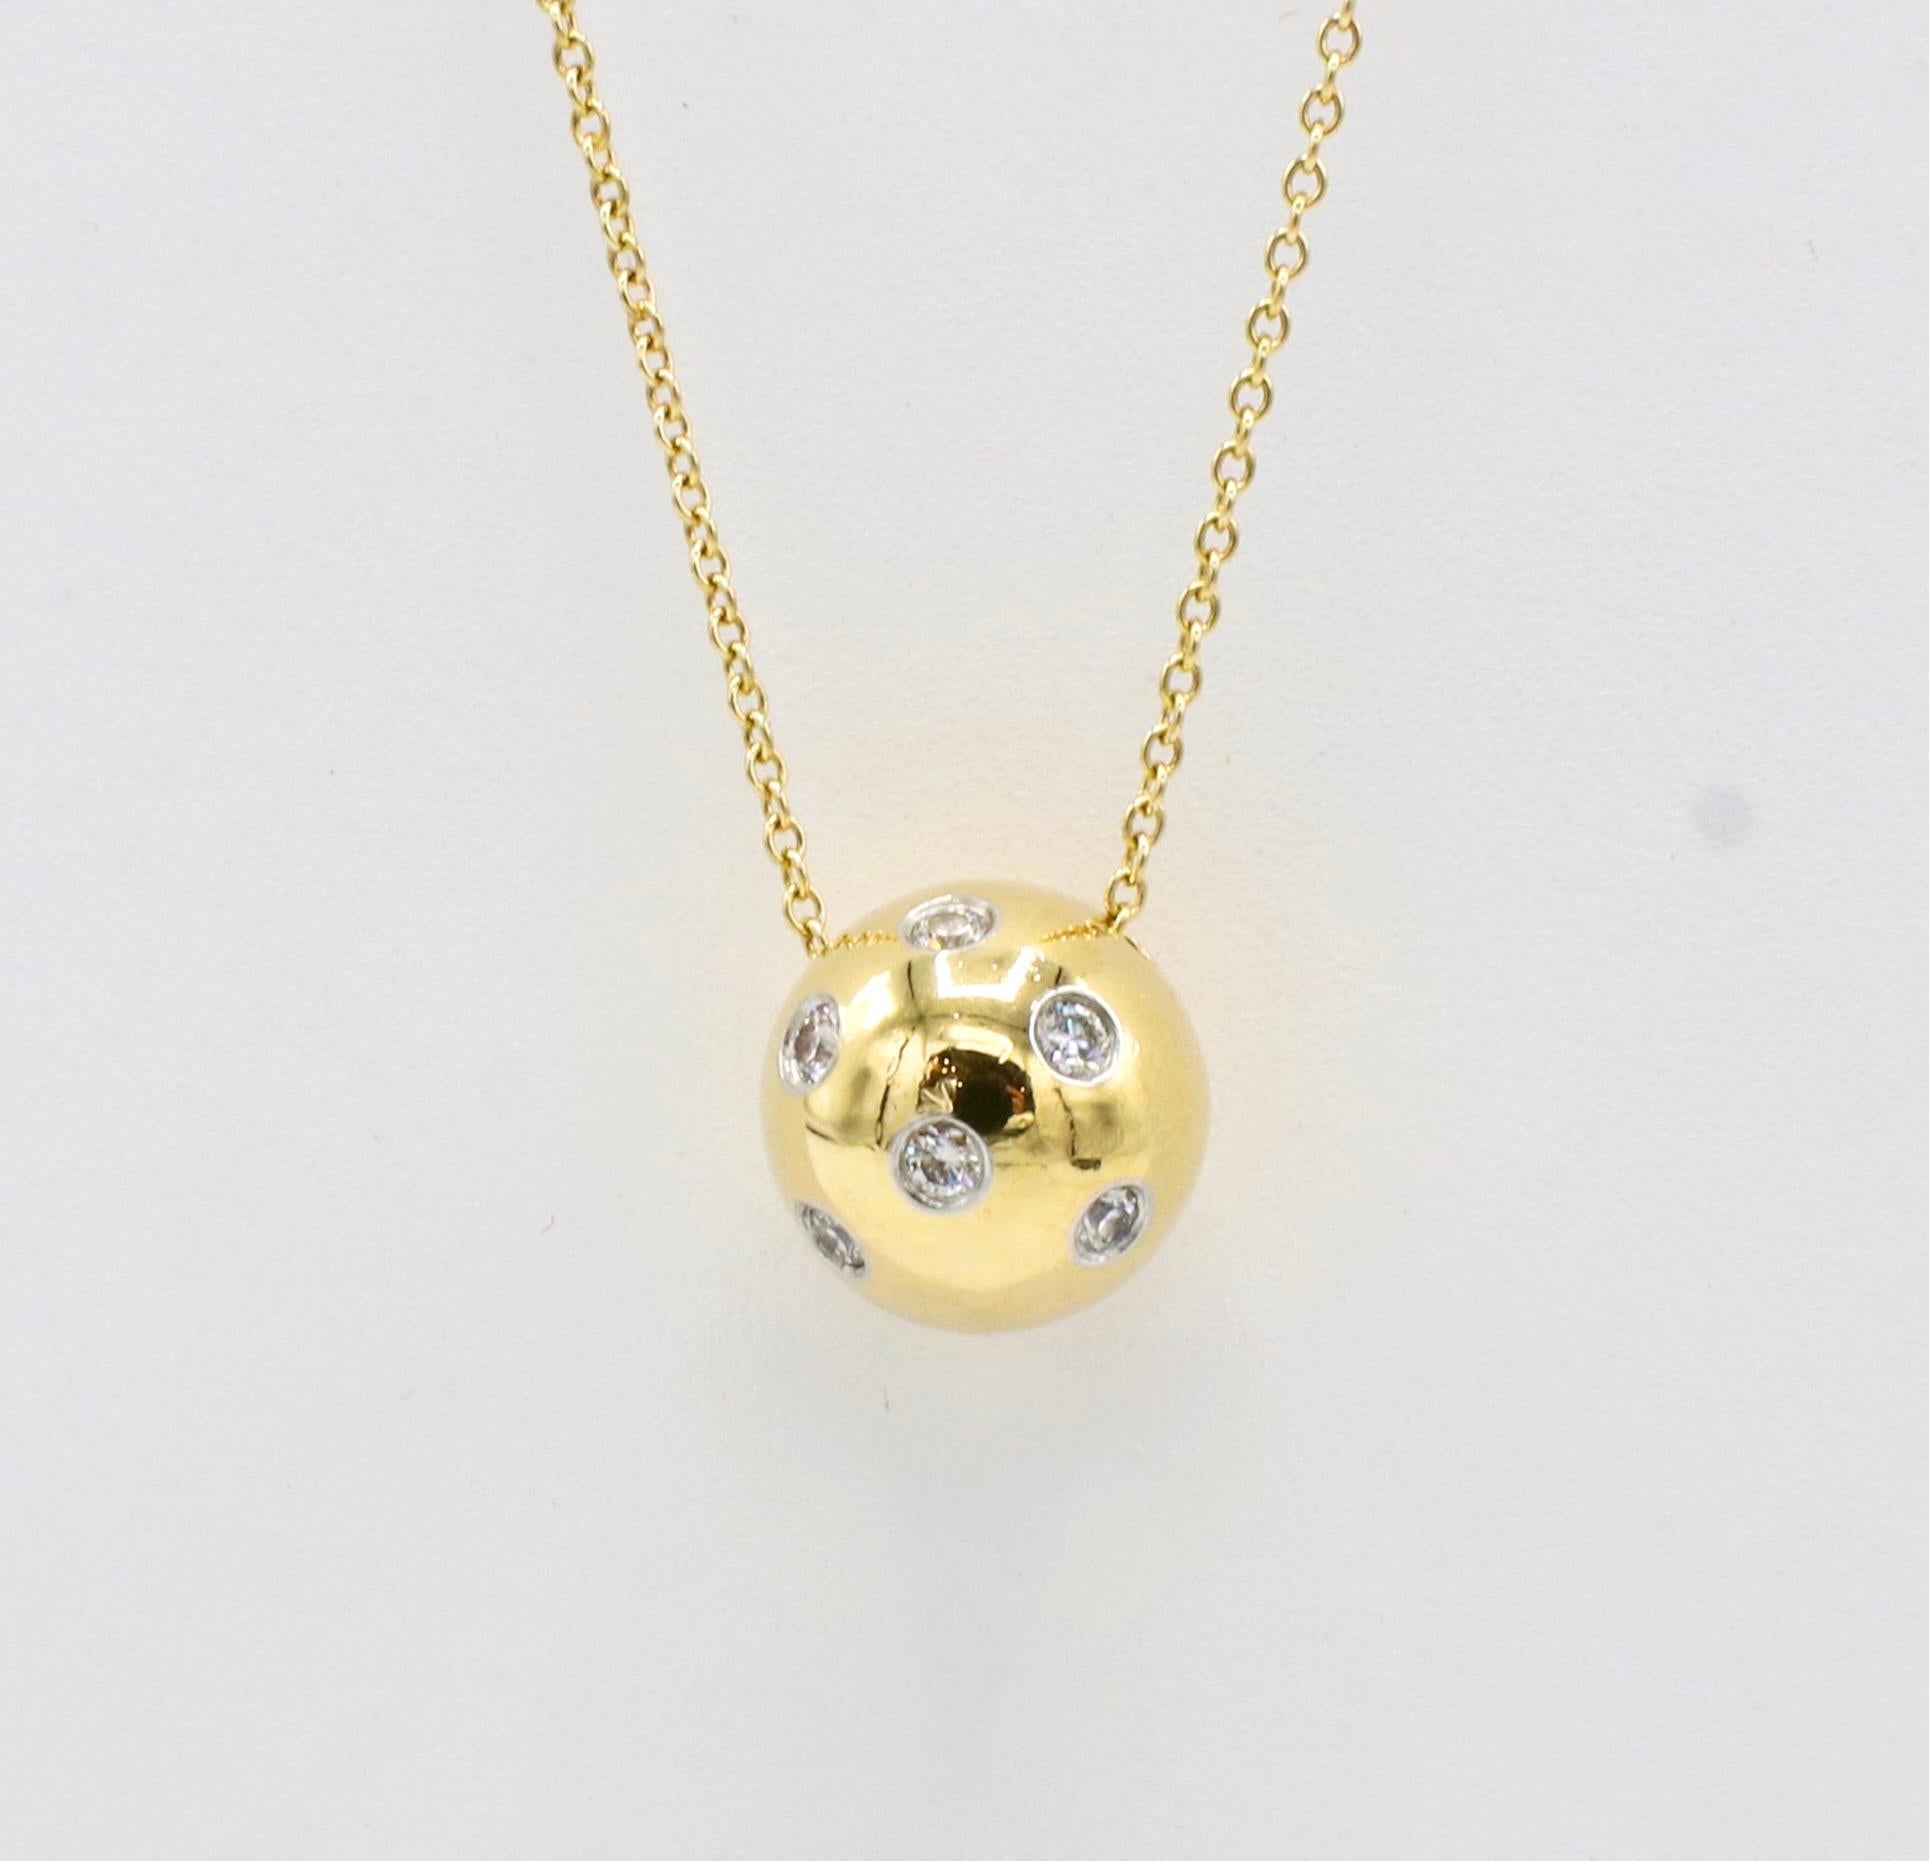 Tiffany & Co. Etoile Platinum & Gold Diamond Ball Drop Pendant Necklace 
Metal: Platinum & 18k yellow gold
Weight: 5.73 grams
Diamonds: Approx. .30 CTW G VS round diamonds
Diameter: 11mm
Chain length: 19 inches
